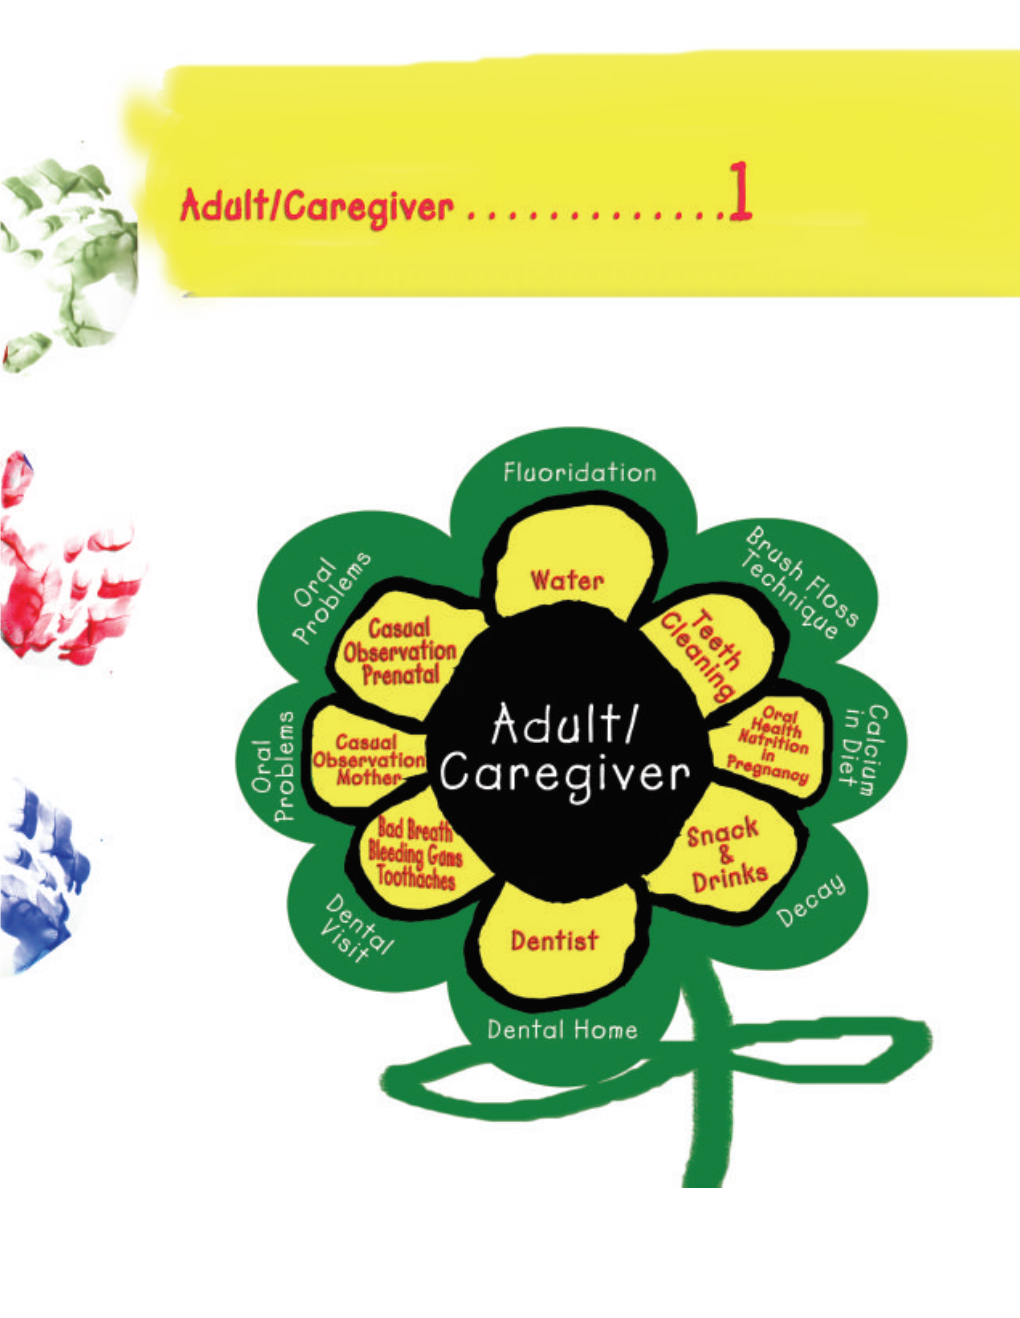 Adult/Caregiver